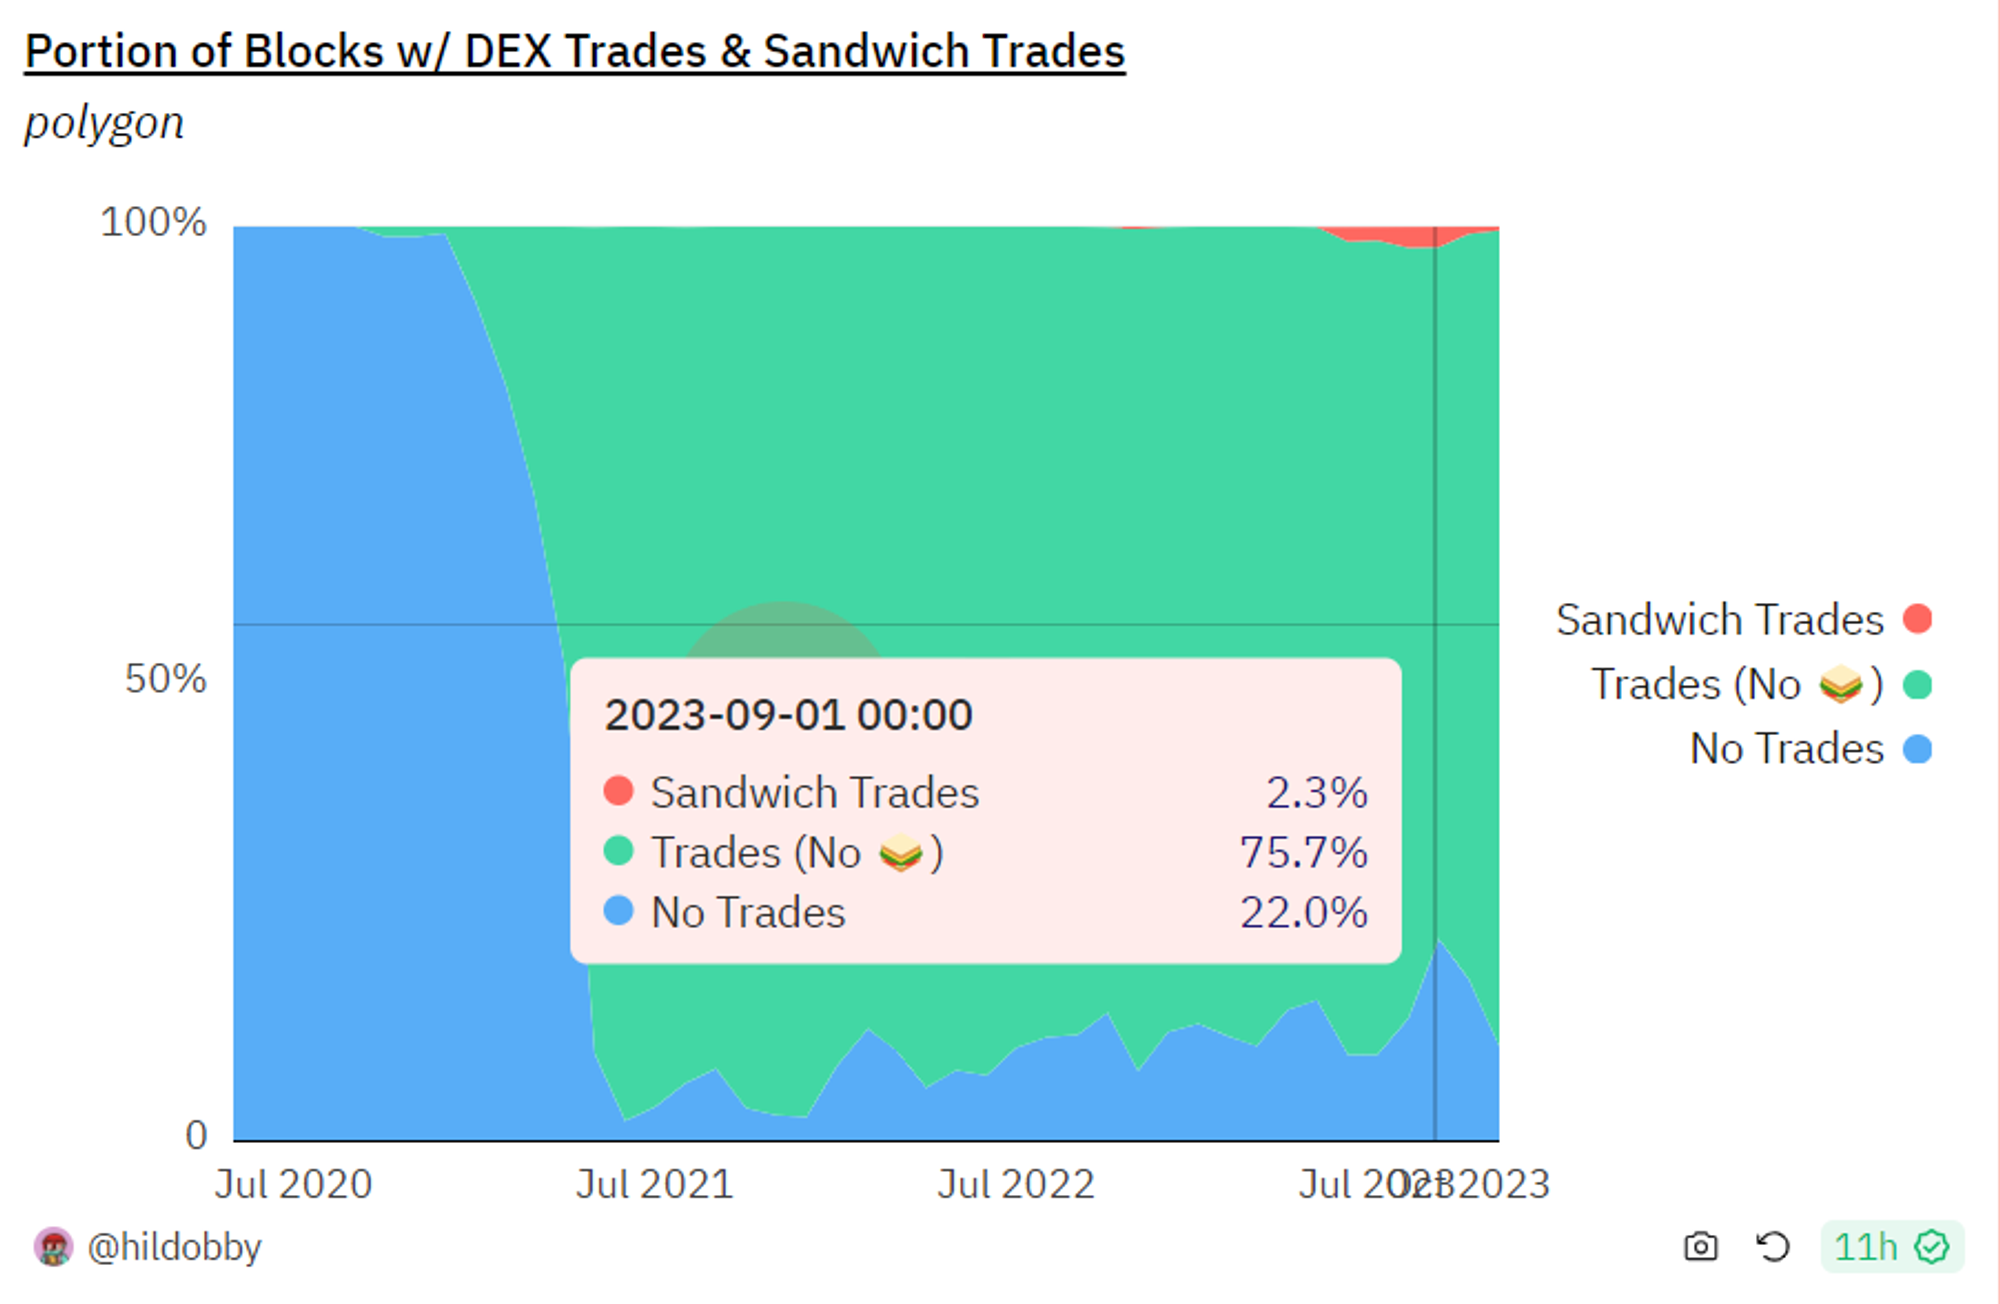 Sandwich trades ratio